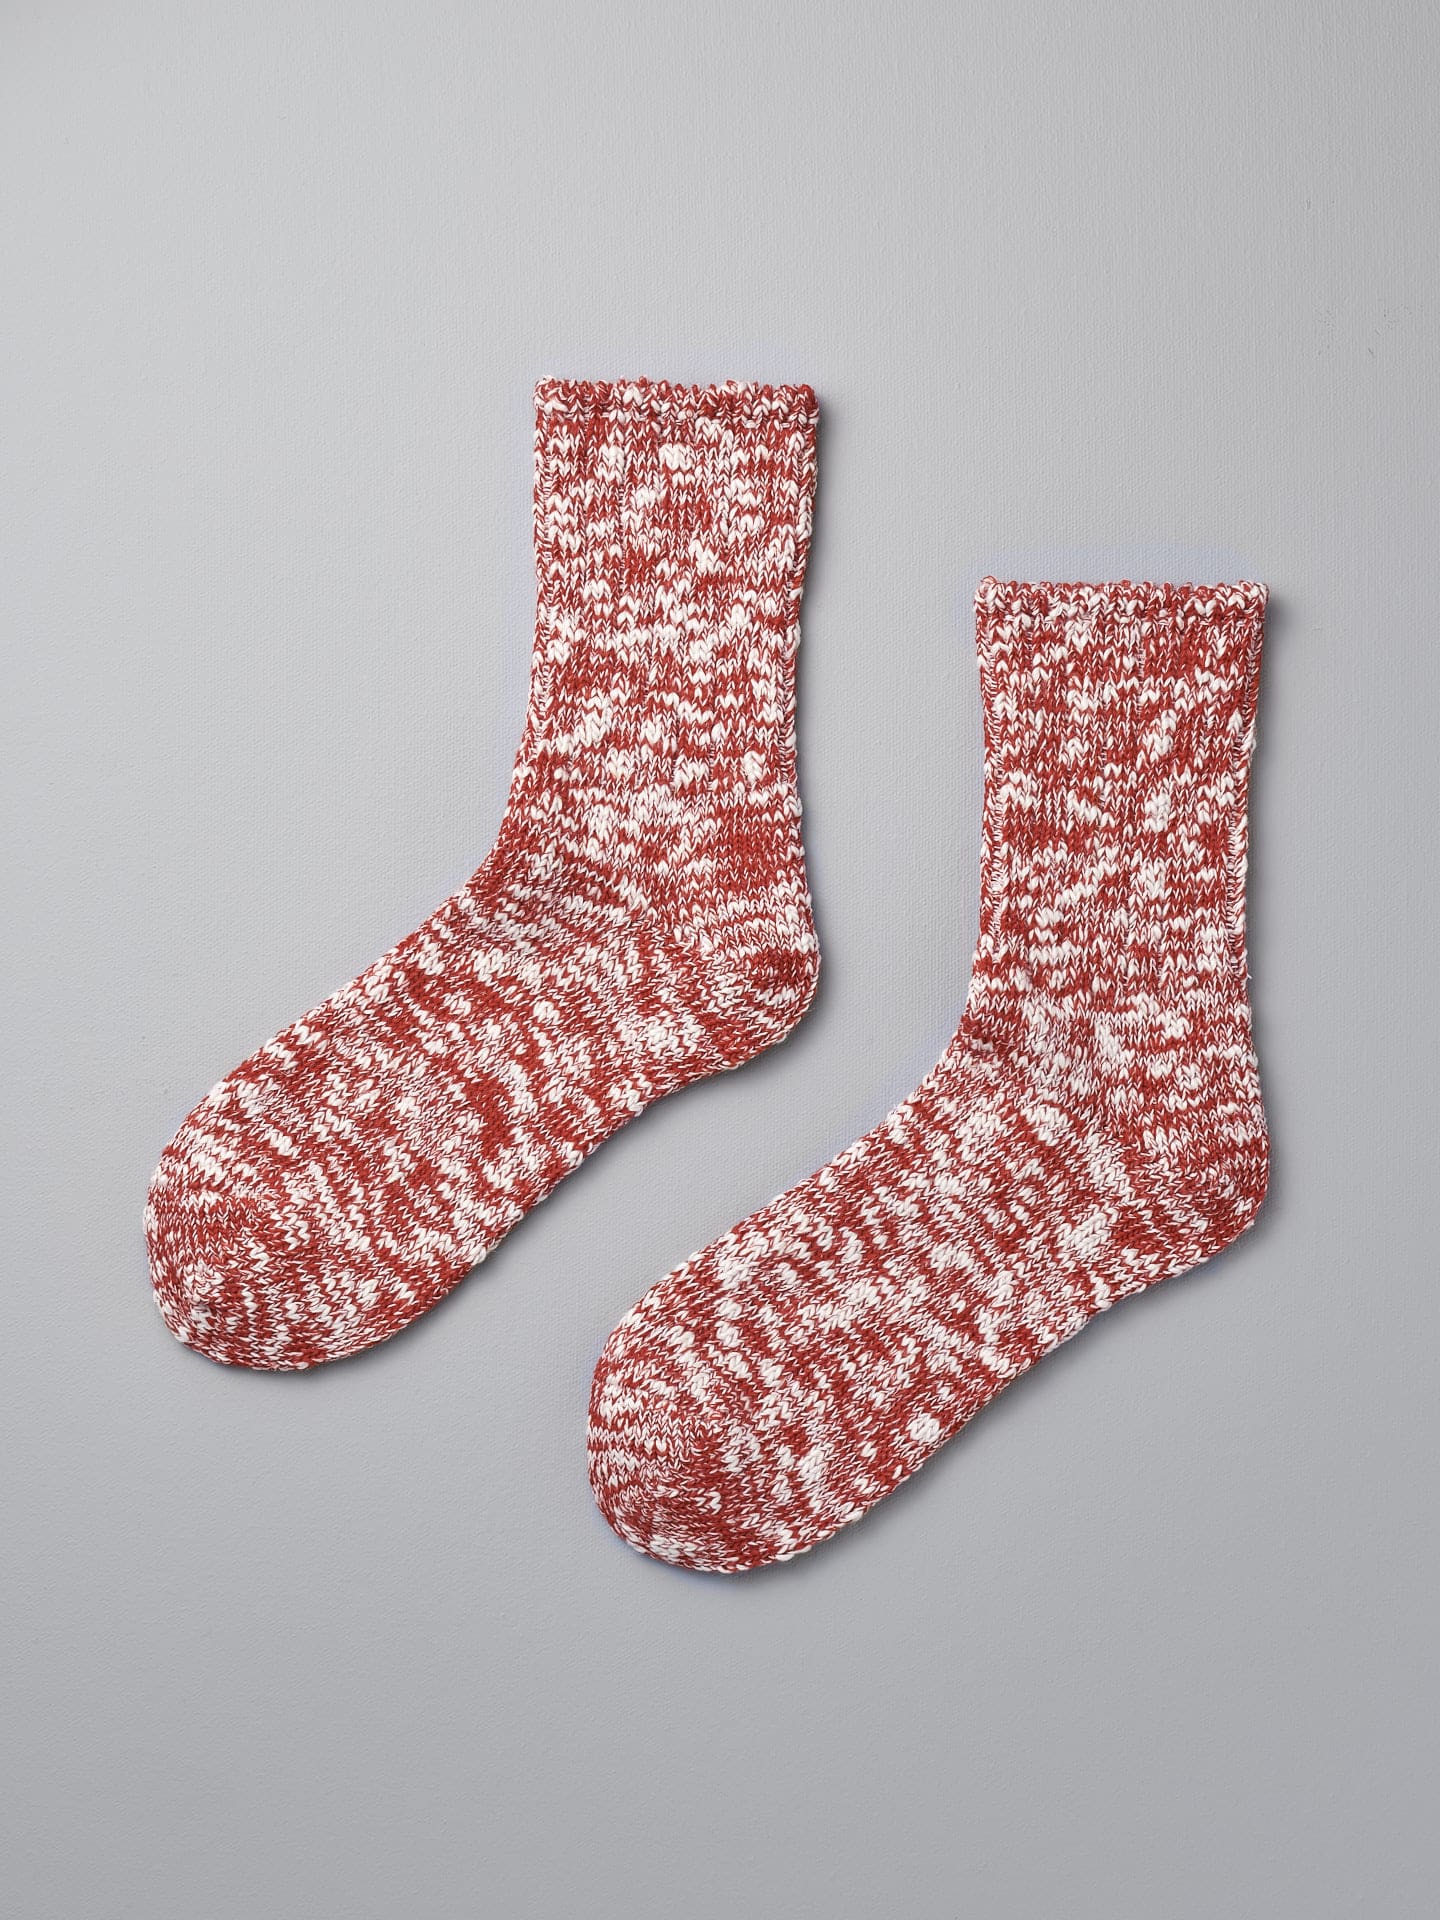 A pair of Mauna Kea Japanese Slub Socks - Red on a grey background.